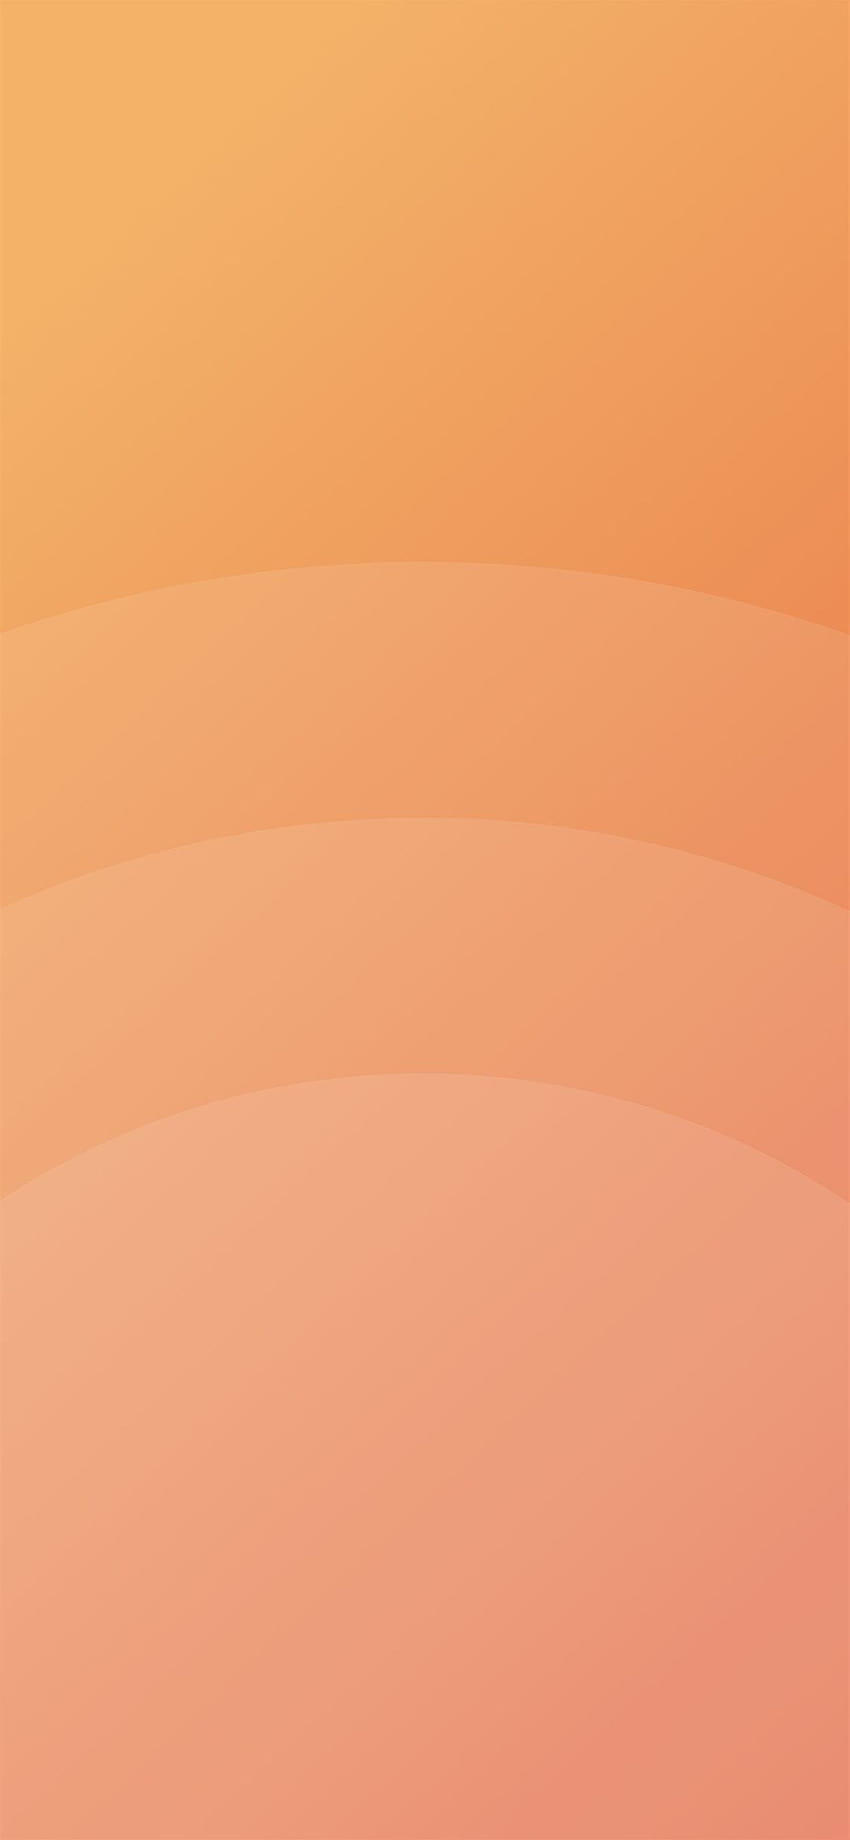 Circle orange simple minimal pattern backgrounds iPhone X, orange minimalist HD phone wallpaper